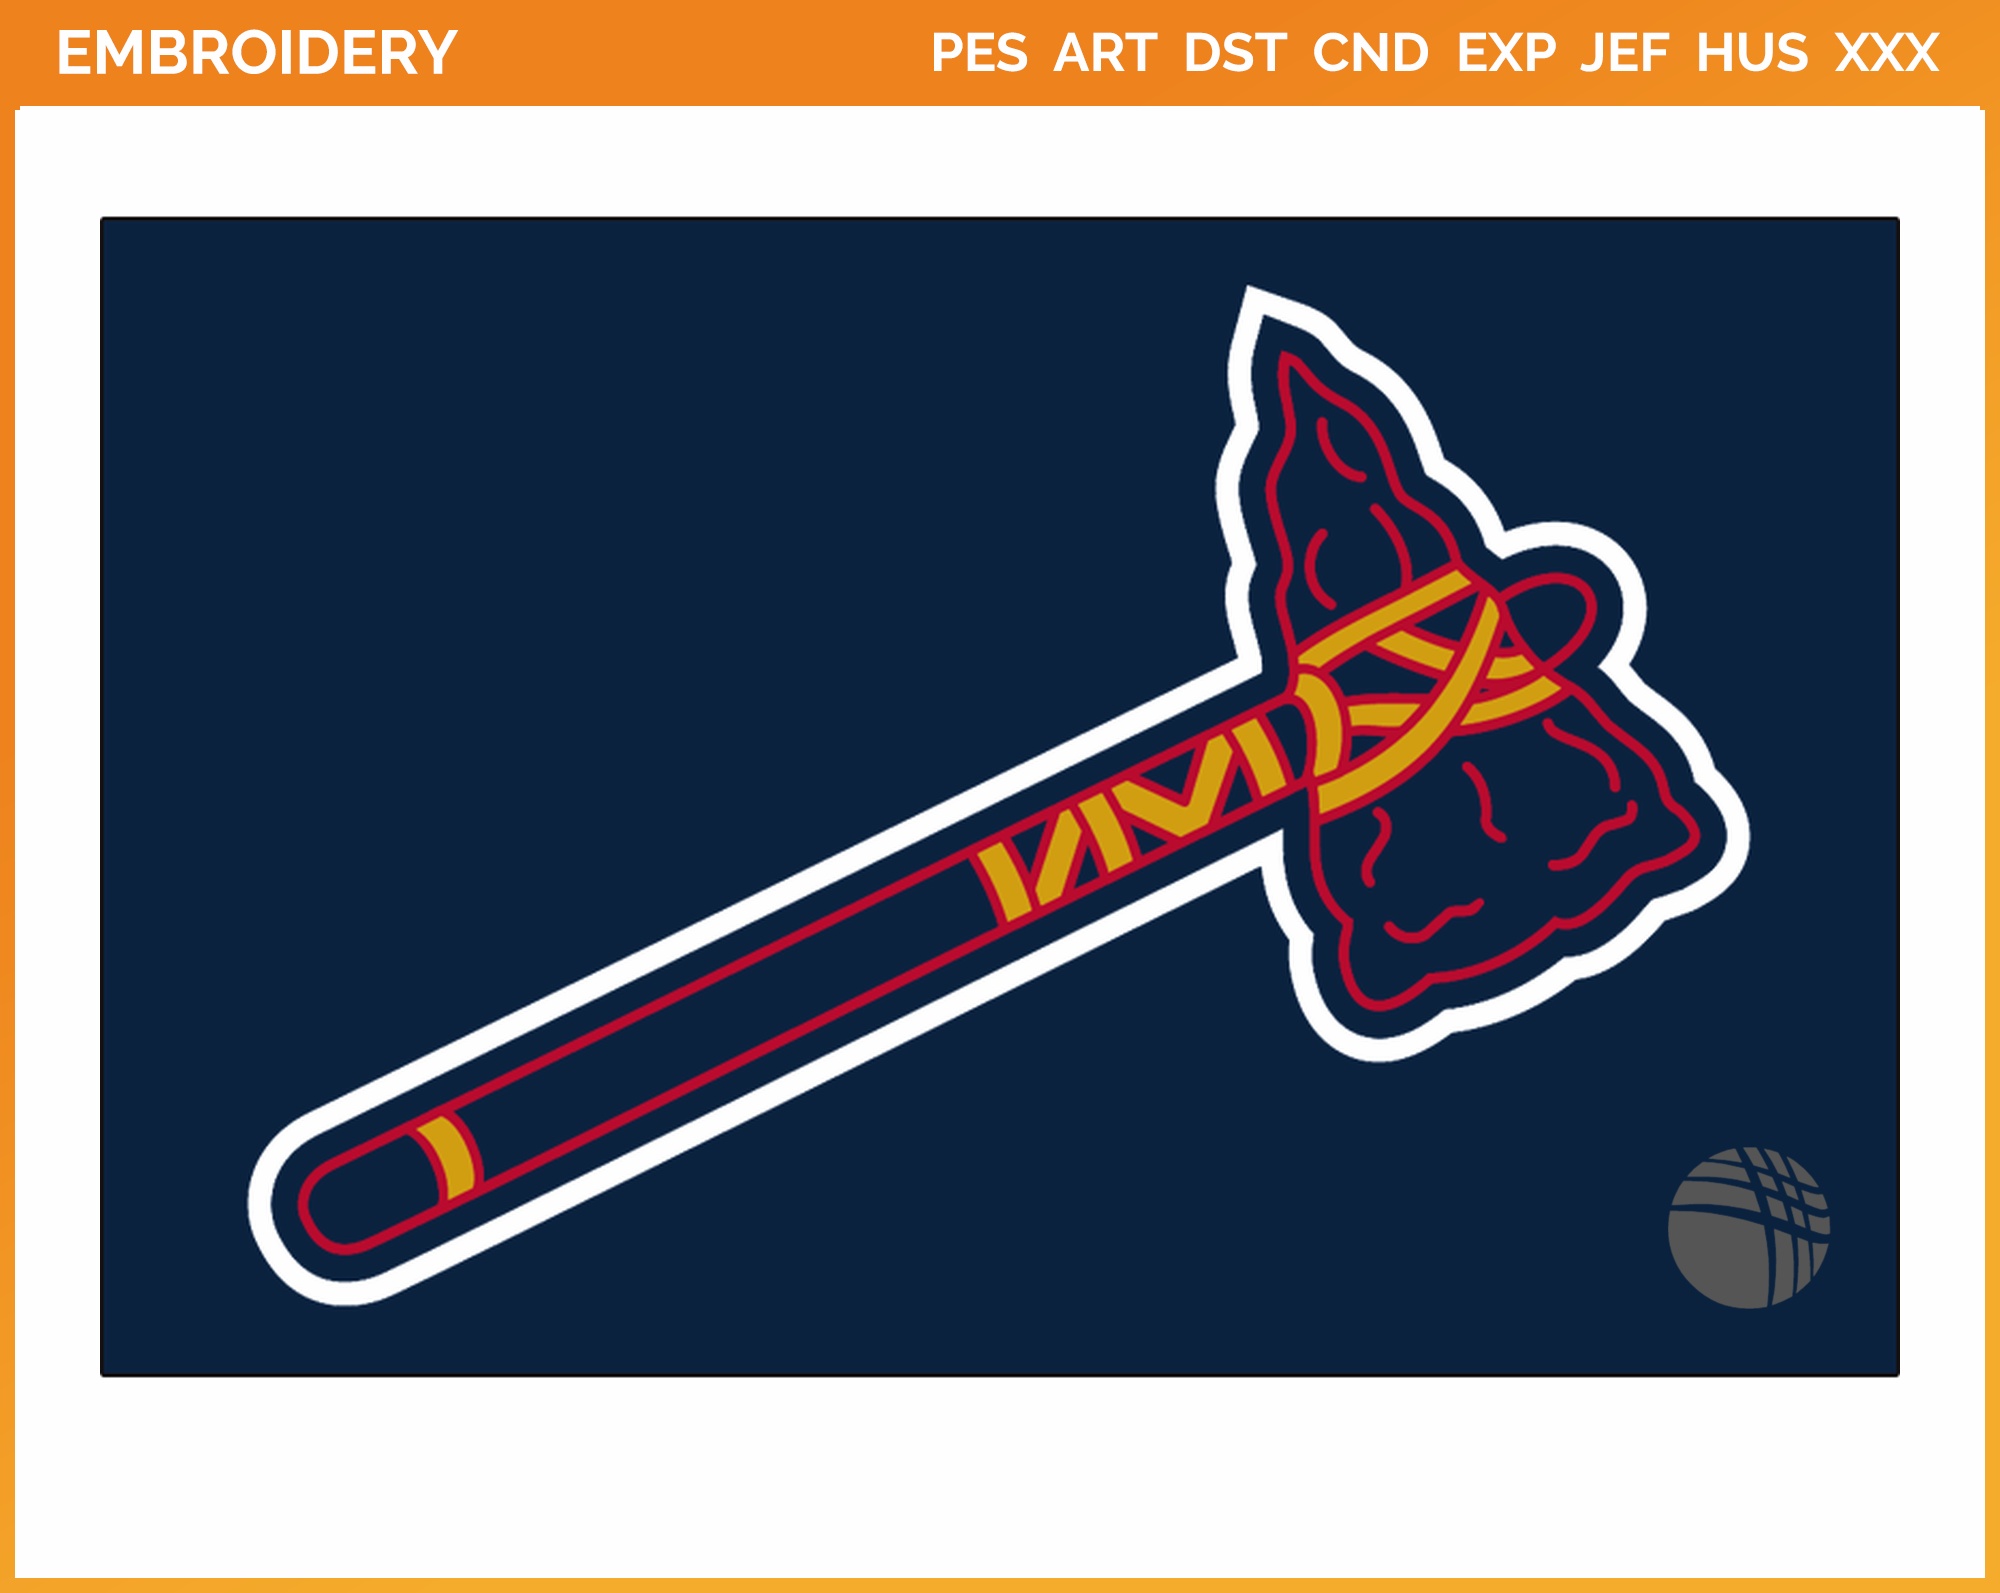 Atlanta Braves Logo PNG Transparent & SVG Vector - Freebie Supply 